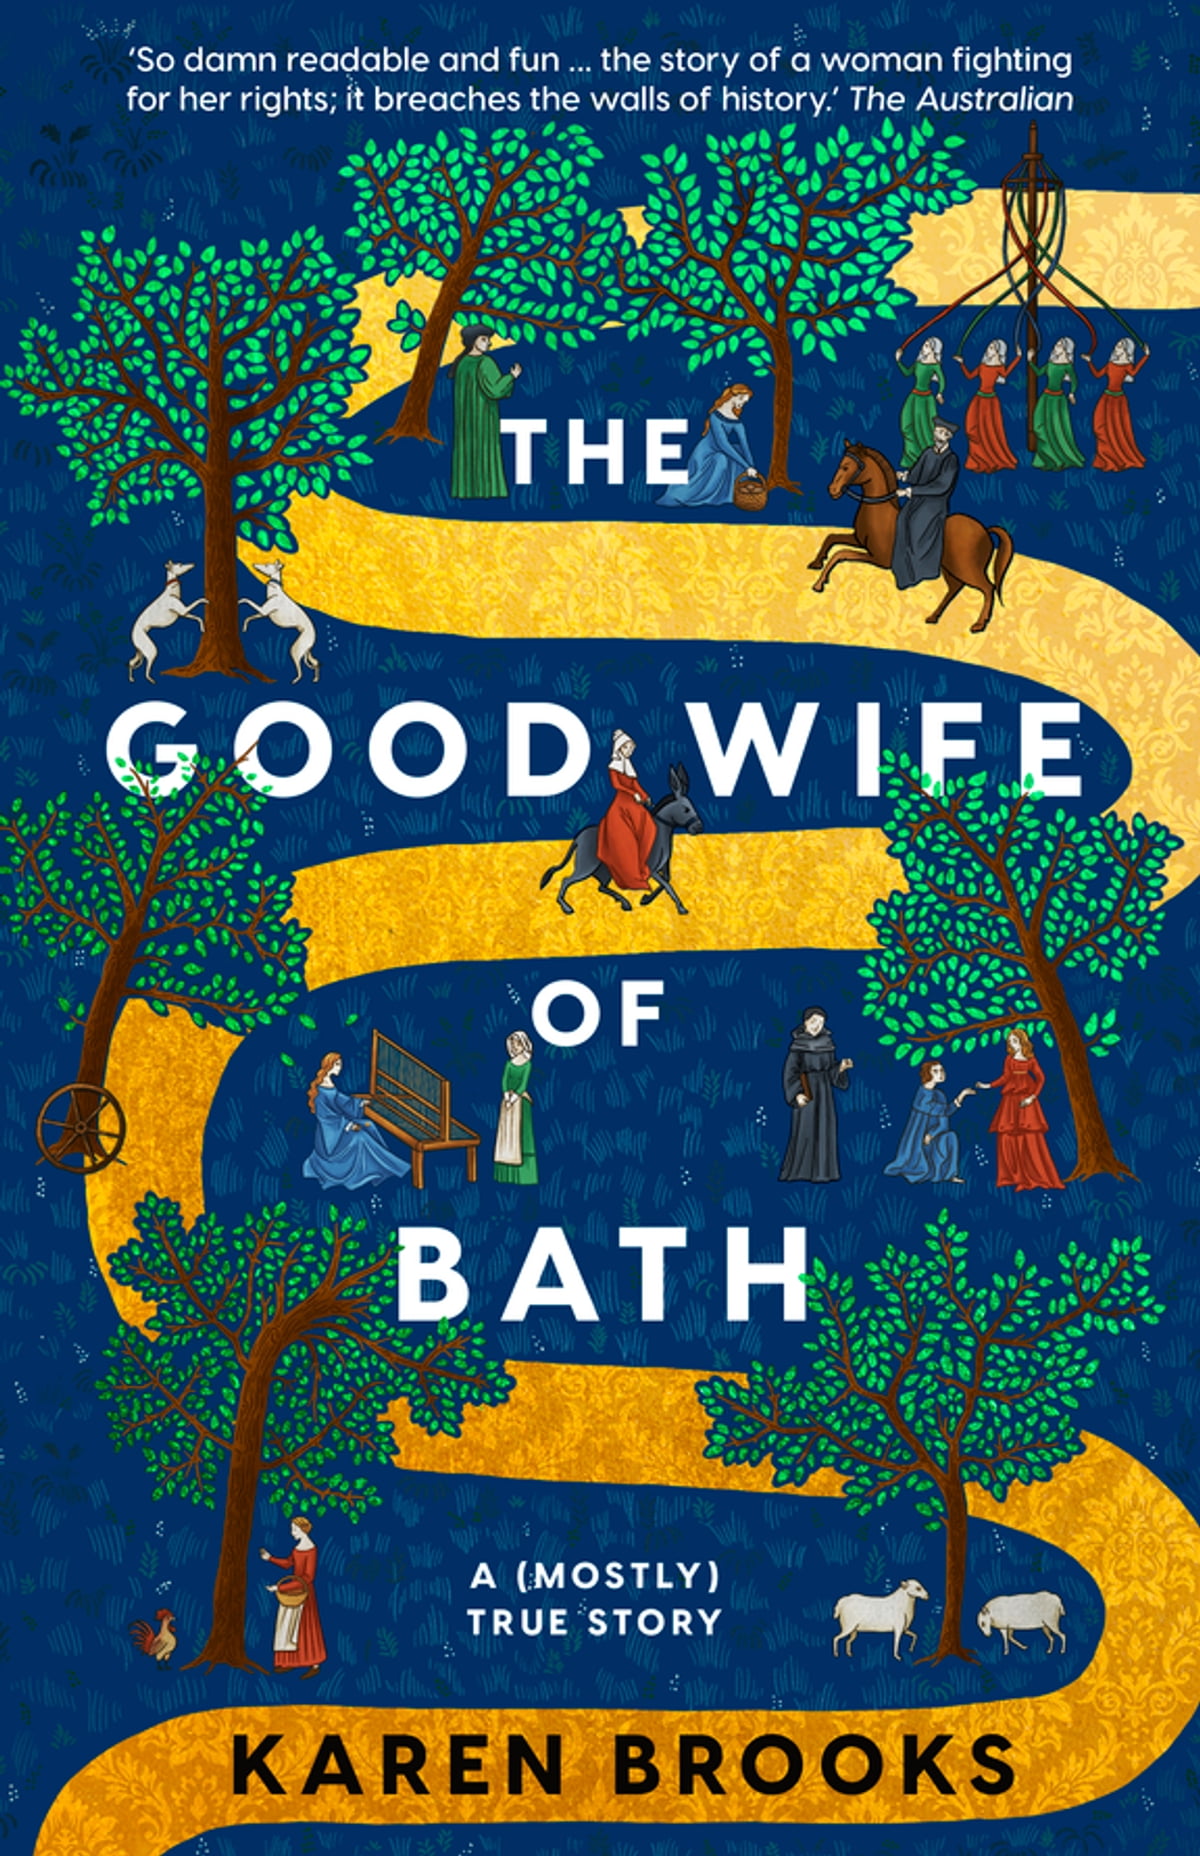 The good wife of bath by Karen Brooks